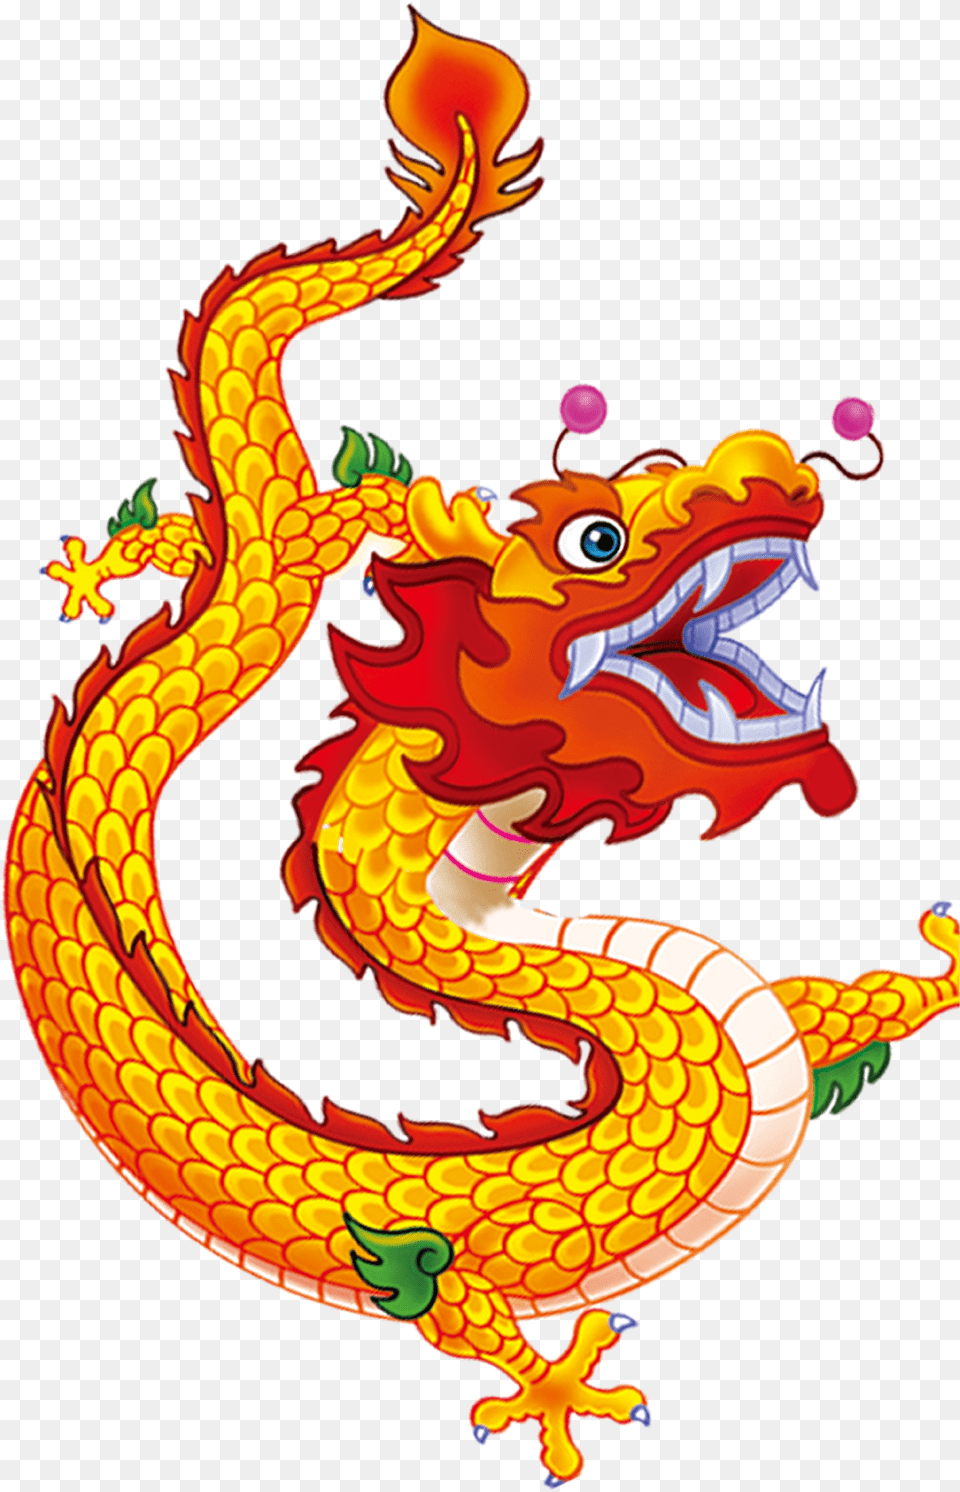 Shenron Chinese Dragon Cartoon Png Image